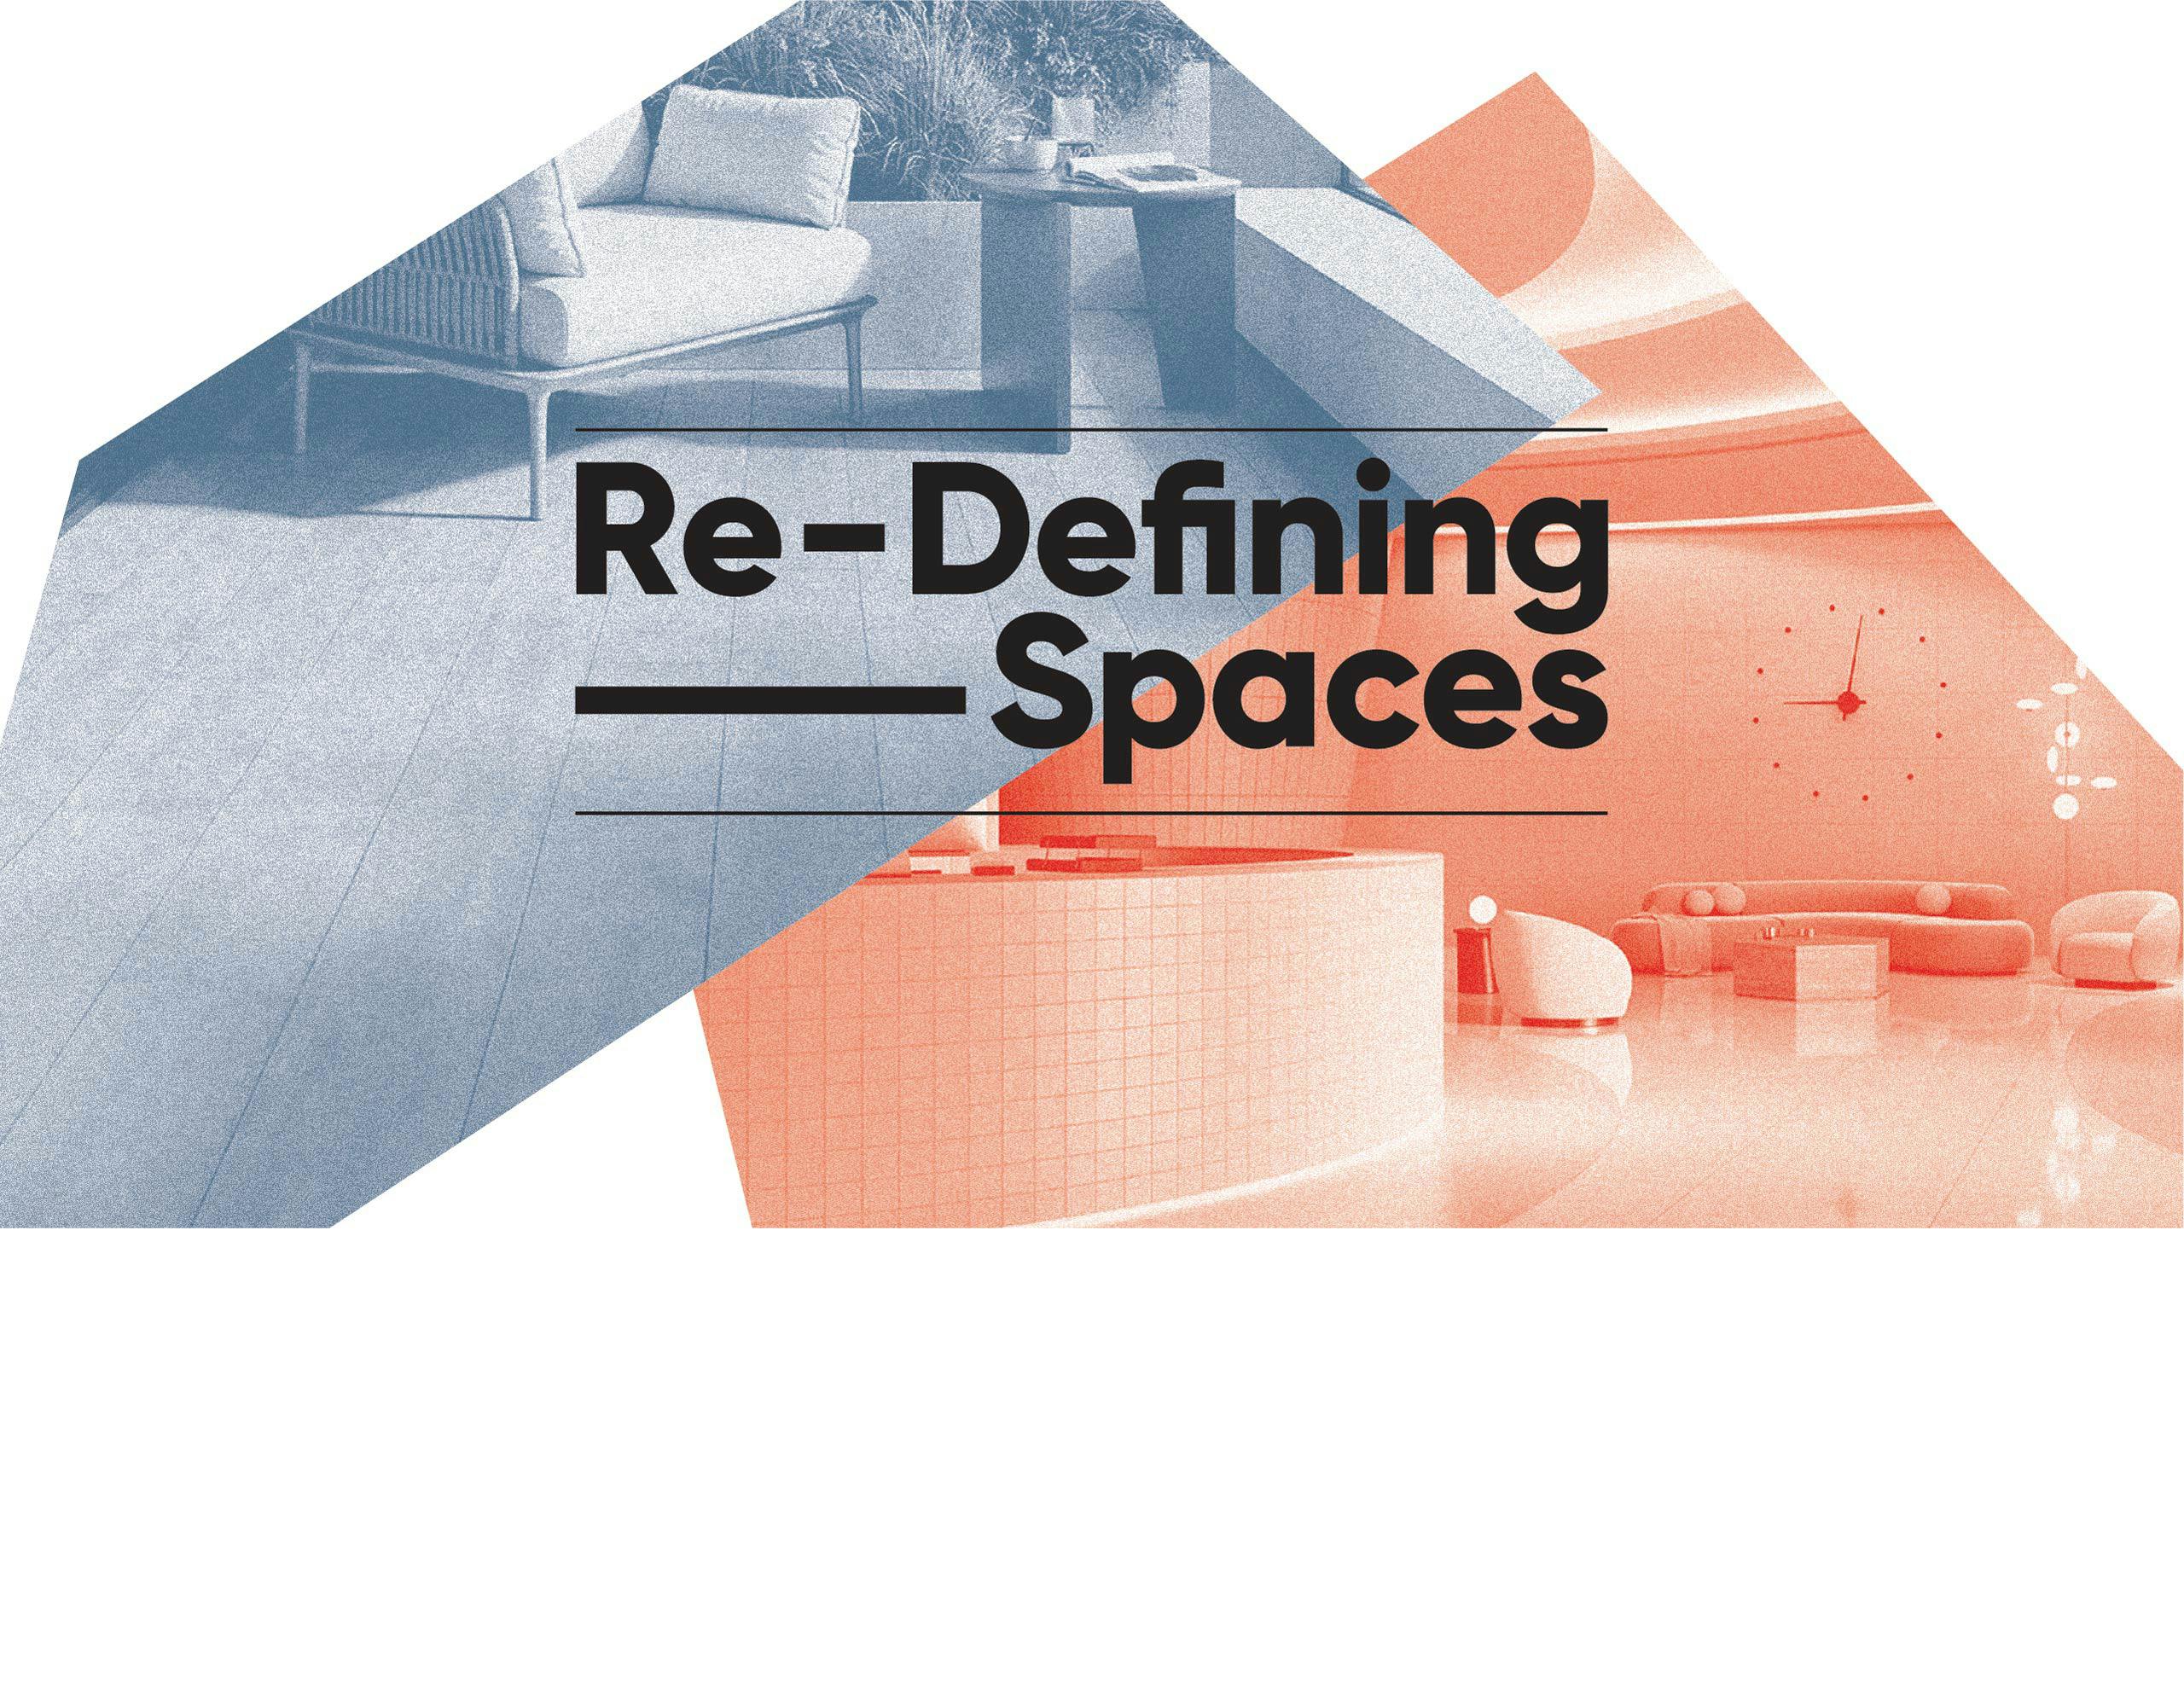 Re-Defining Spaces